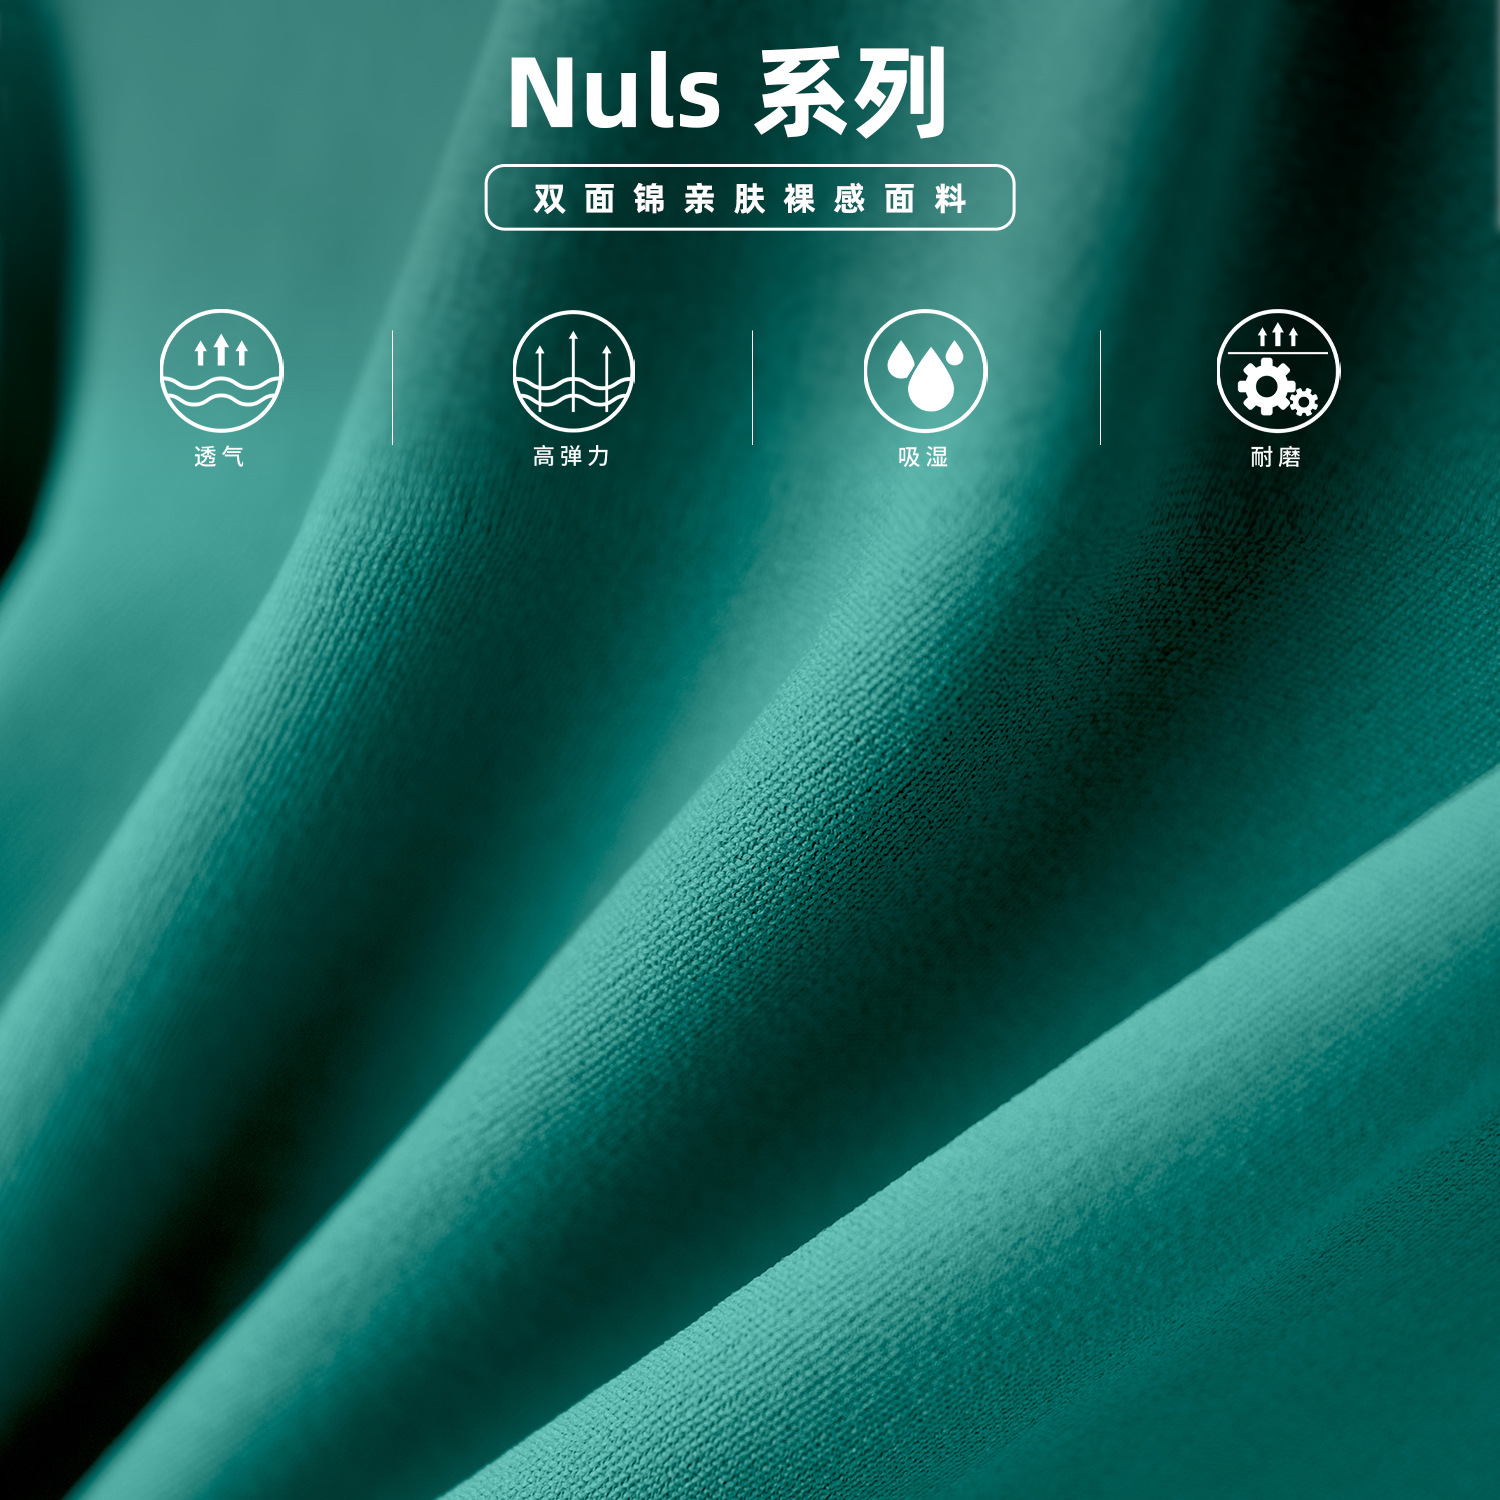 NULS裸感/欧美时尚美背细节图